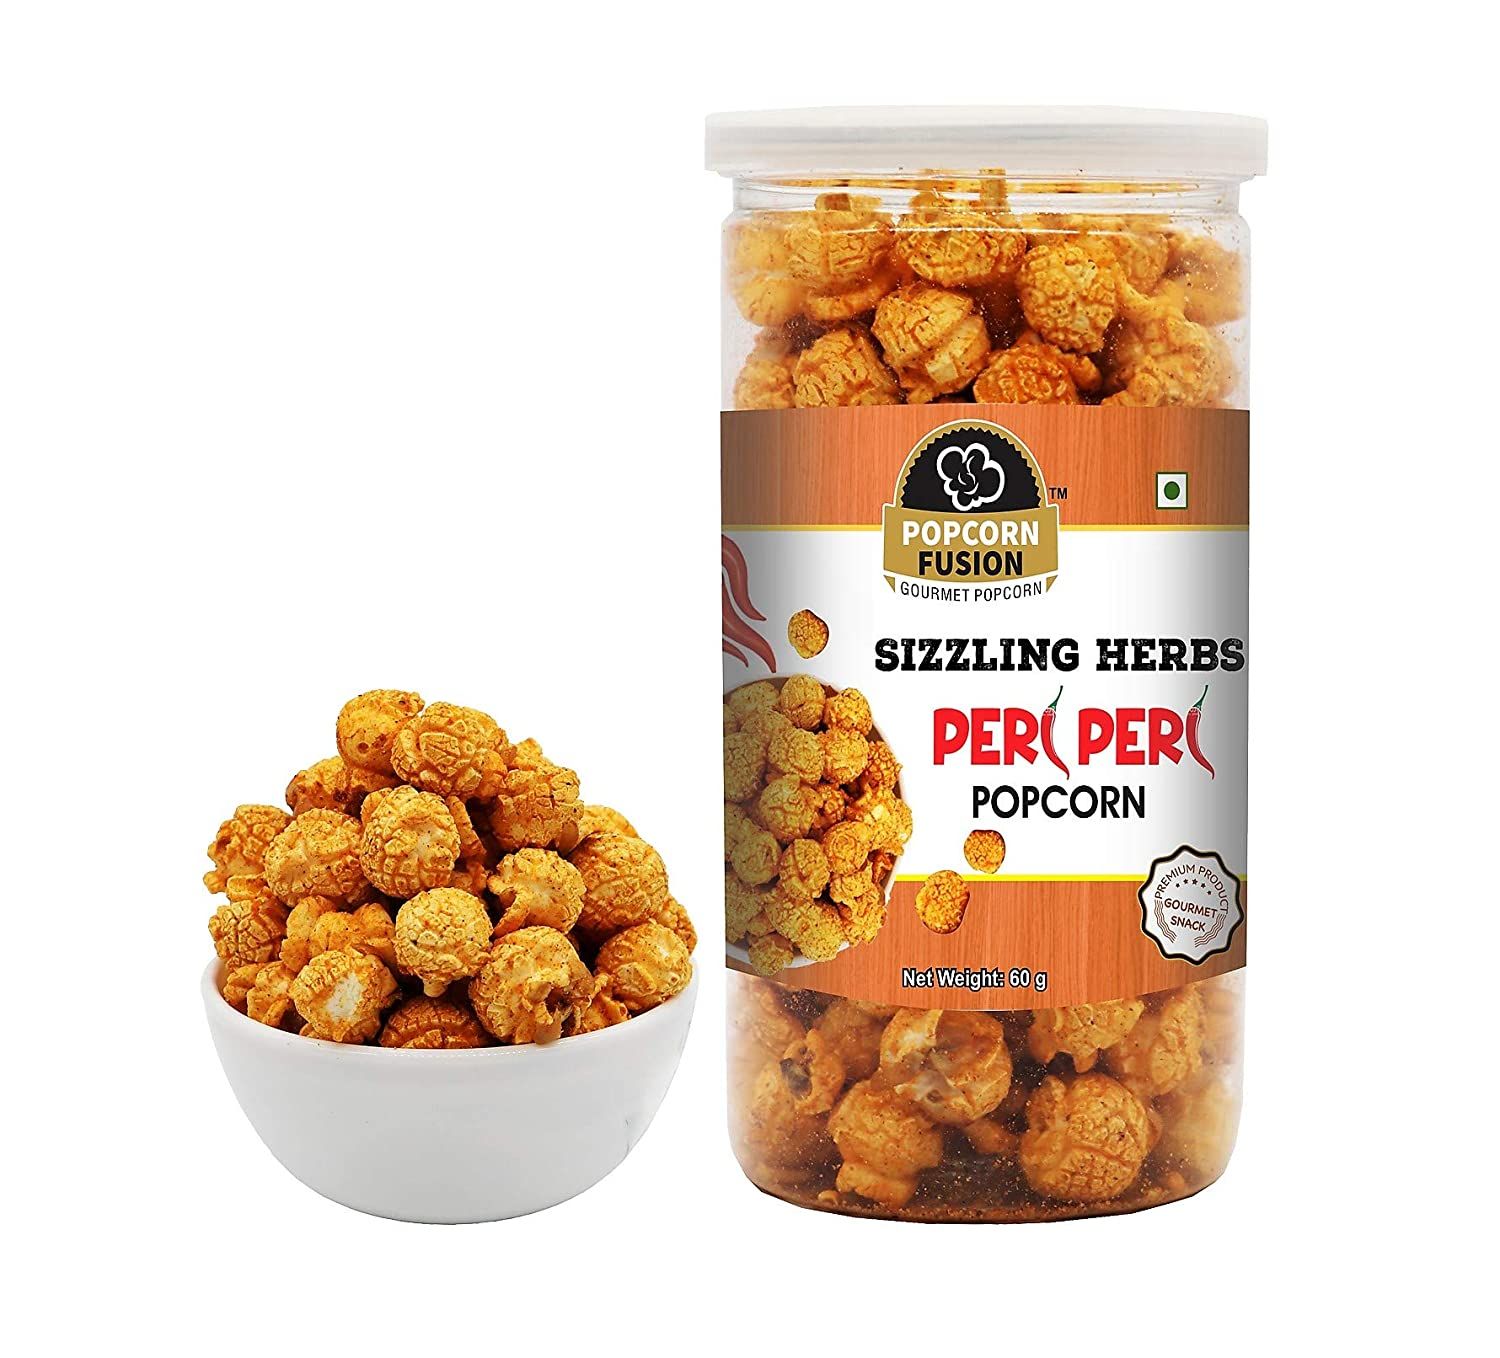 Popcorn Fusion Sizzling Herbs Peri Peri Popcorn Image